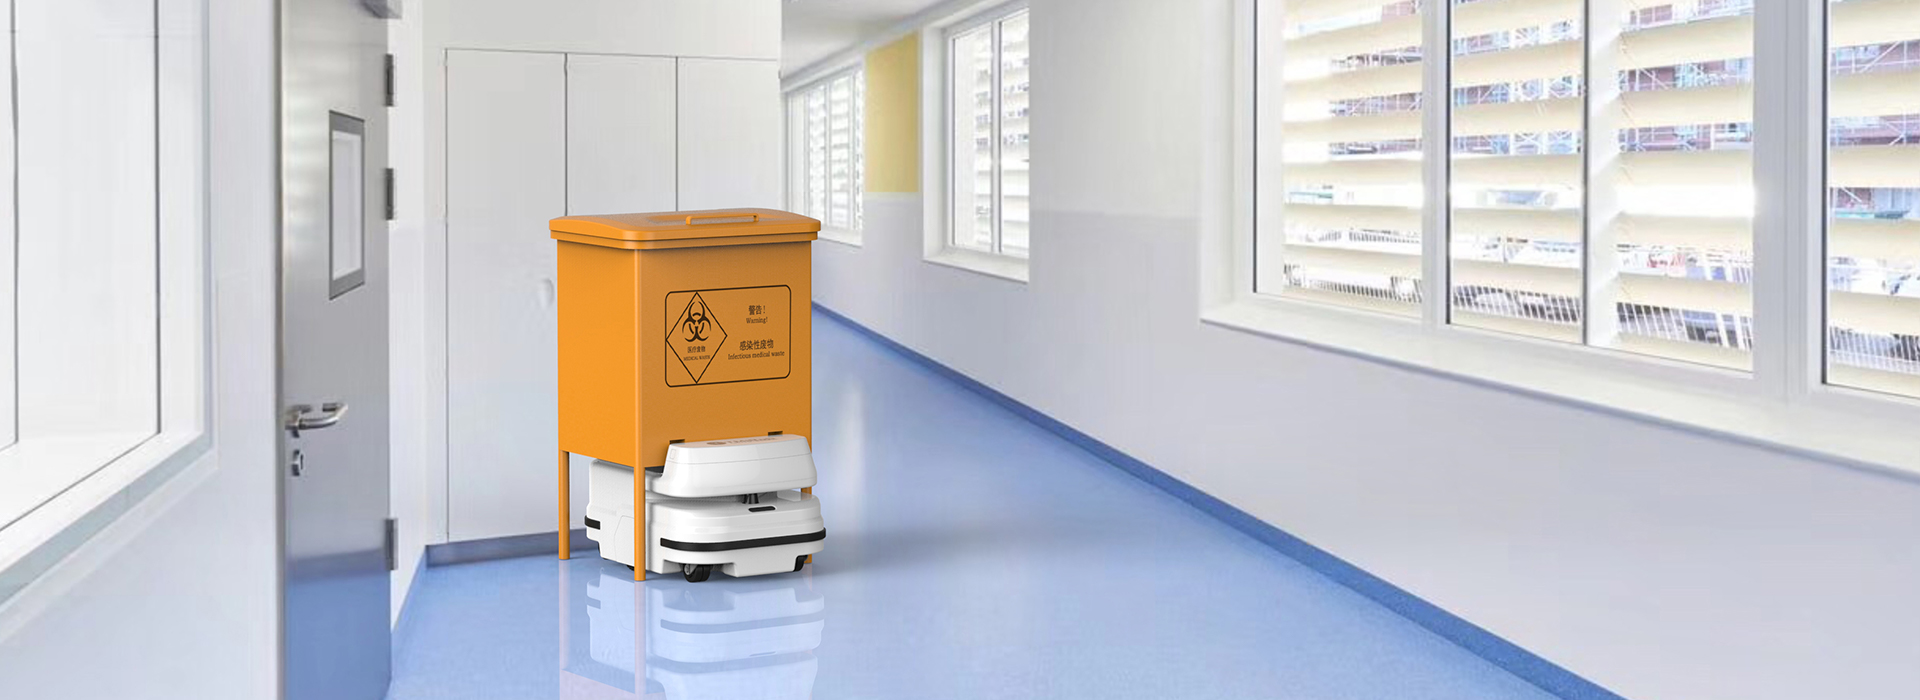 Medical Delivery Robot